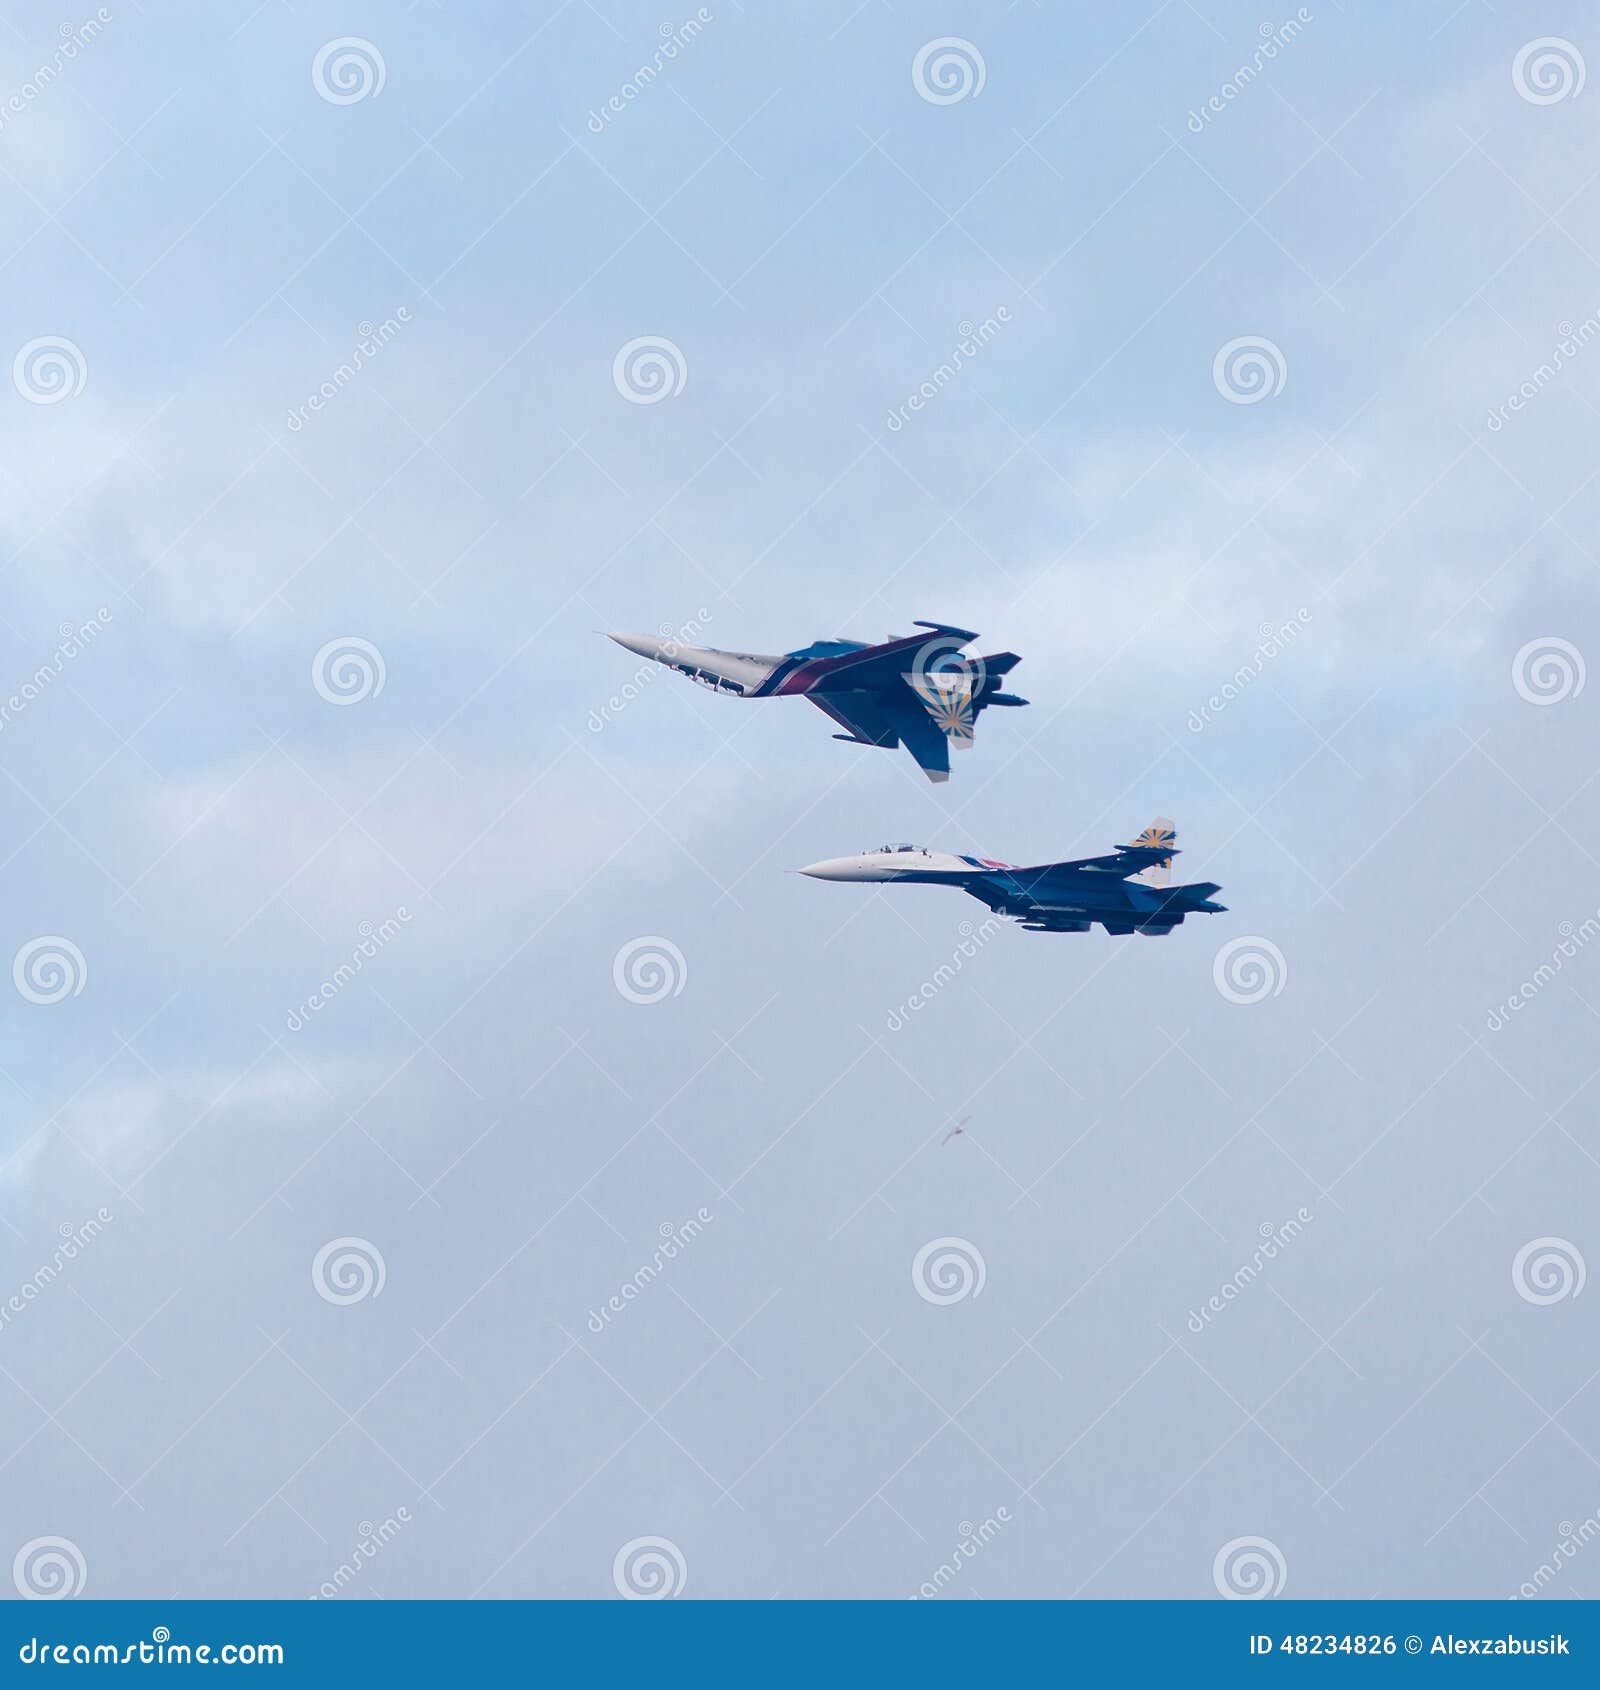 military jet planes showing aerobatics